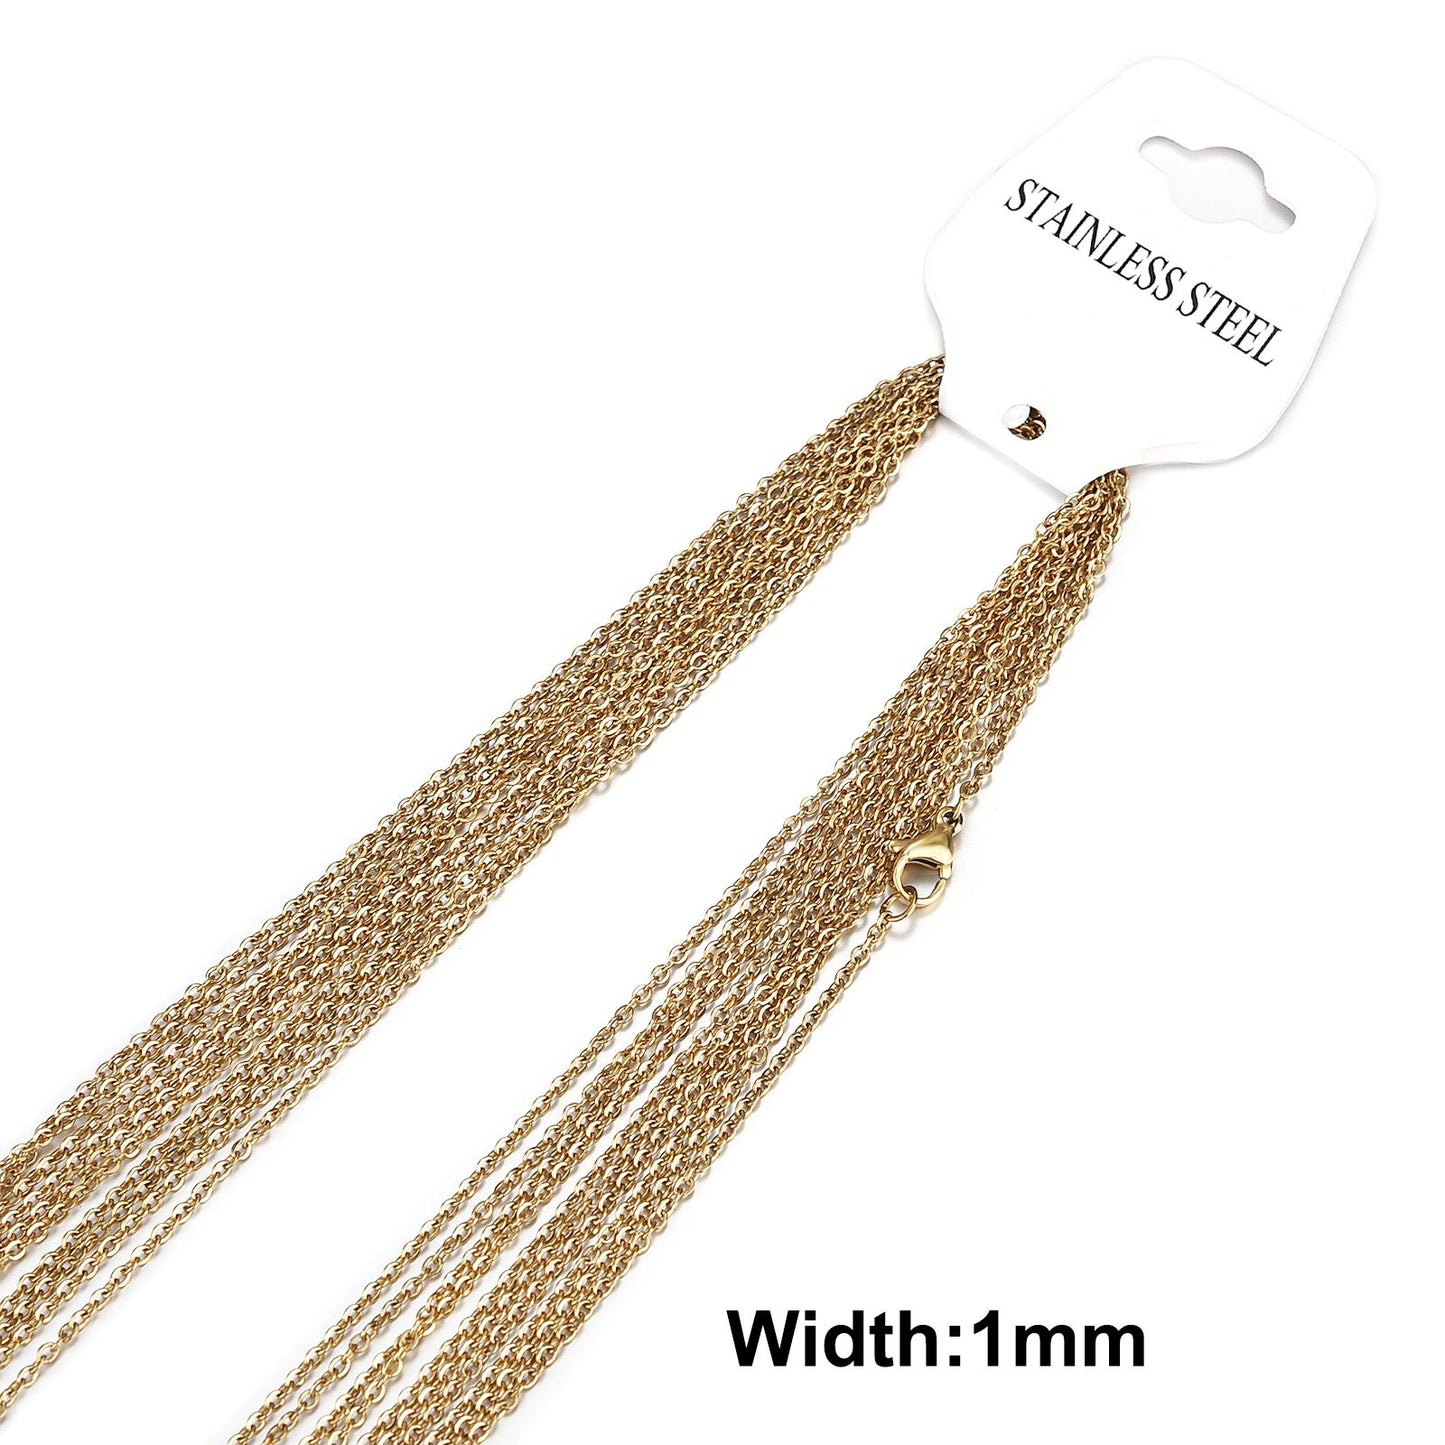 10pcs Gold Color Stainless Steel Link 45/50/55/60CM Bulk Necklace Chains Jewelry Cuban Chains Wholesale Chain Chokers DIY Crafts - Gold Color-1mm / 50cm - Gold Color-1mm / 55cm - Gold Color-1mm / 60cm - Gold Color-1mm / 45cm extend 5cm